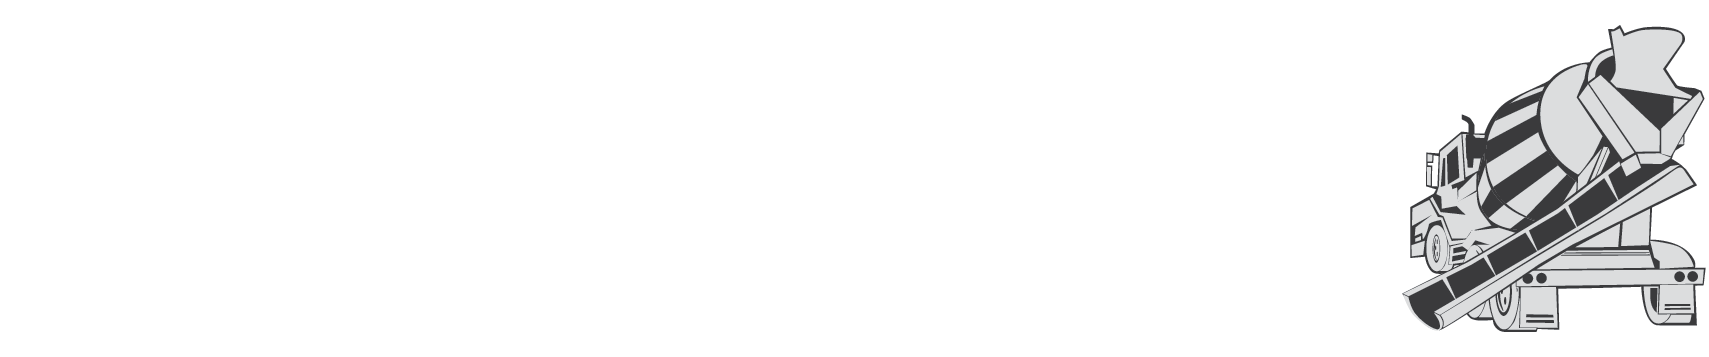 Concrete Conference